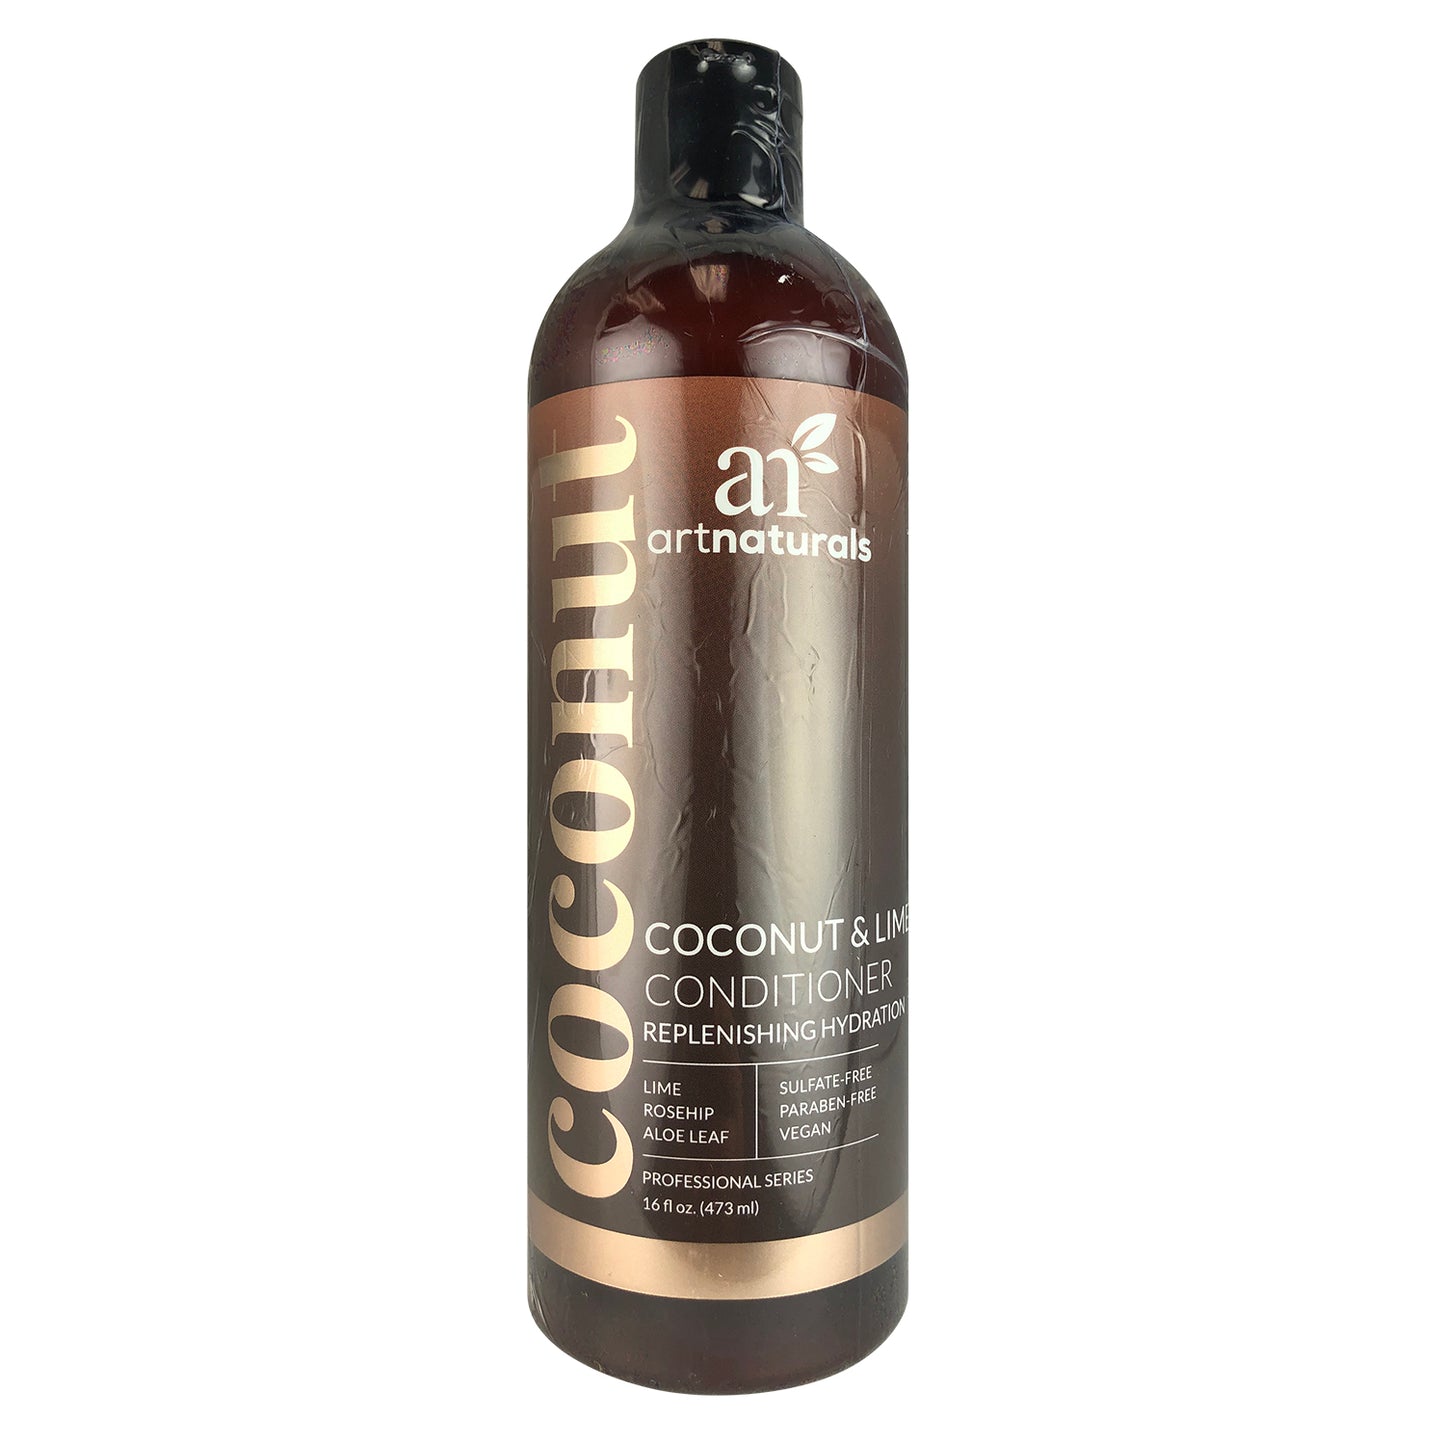 Artnaturals Coconut & Lime Hair Conditioner 16 oz Sulfate Paraben Free Vegan